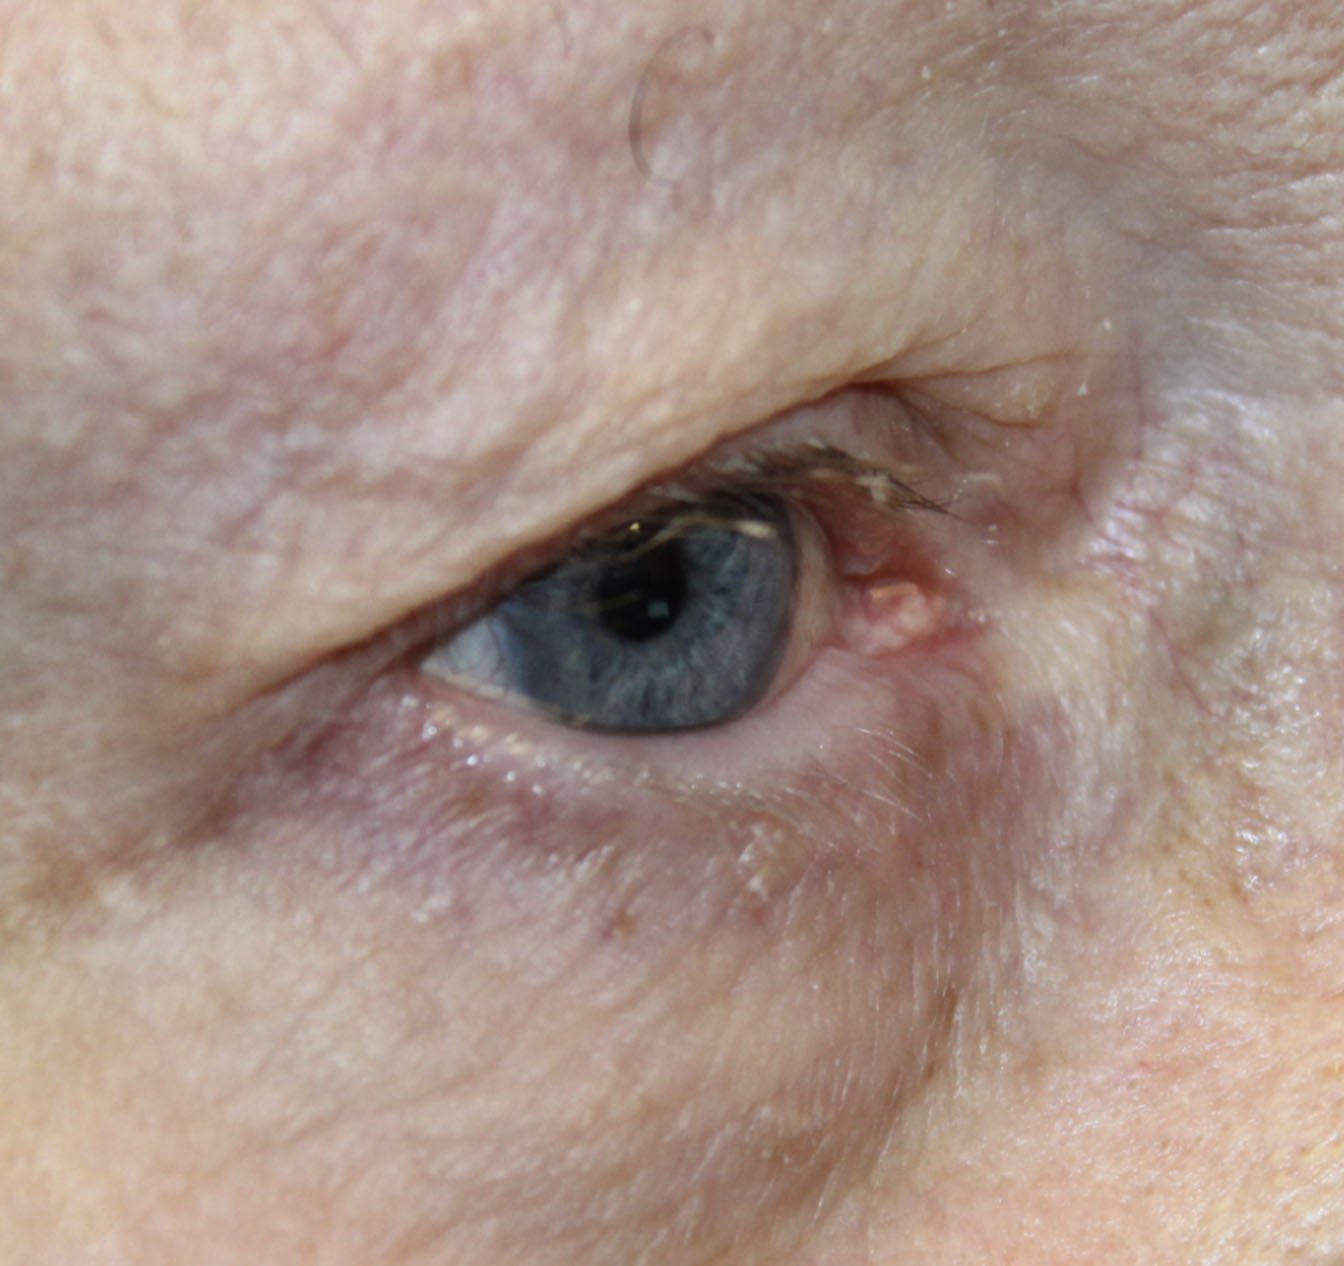 75 year old main before receiving entropion eye repair